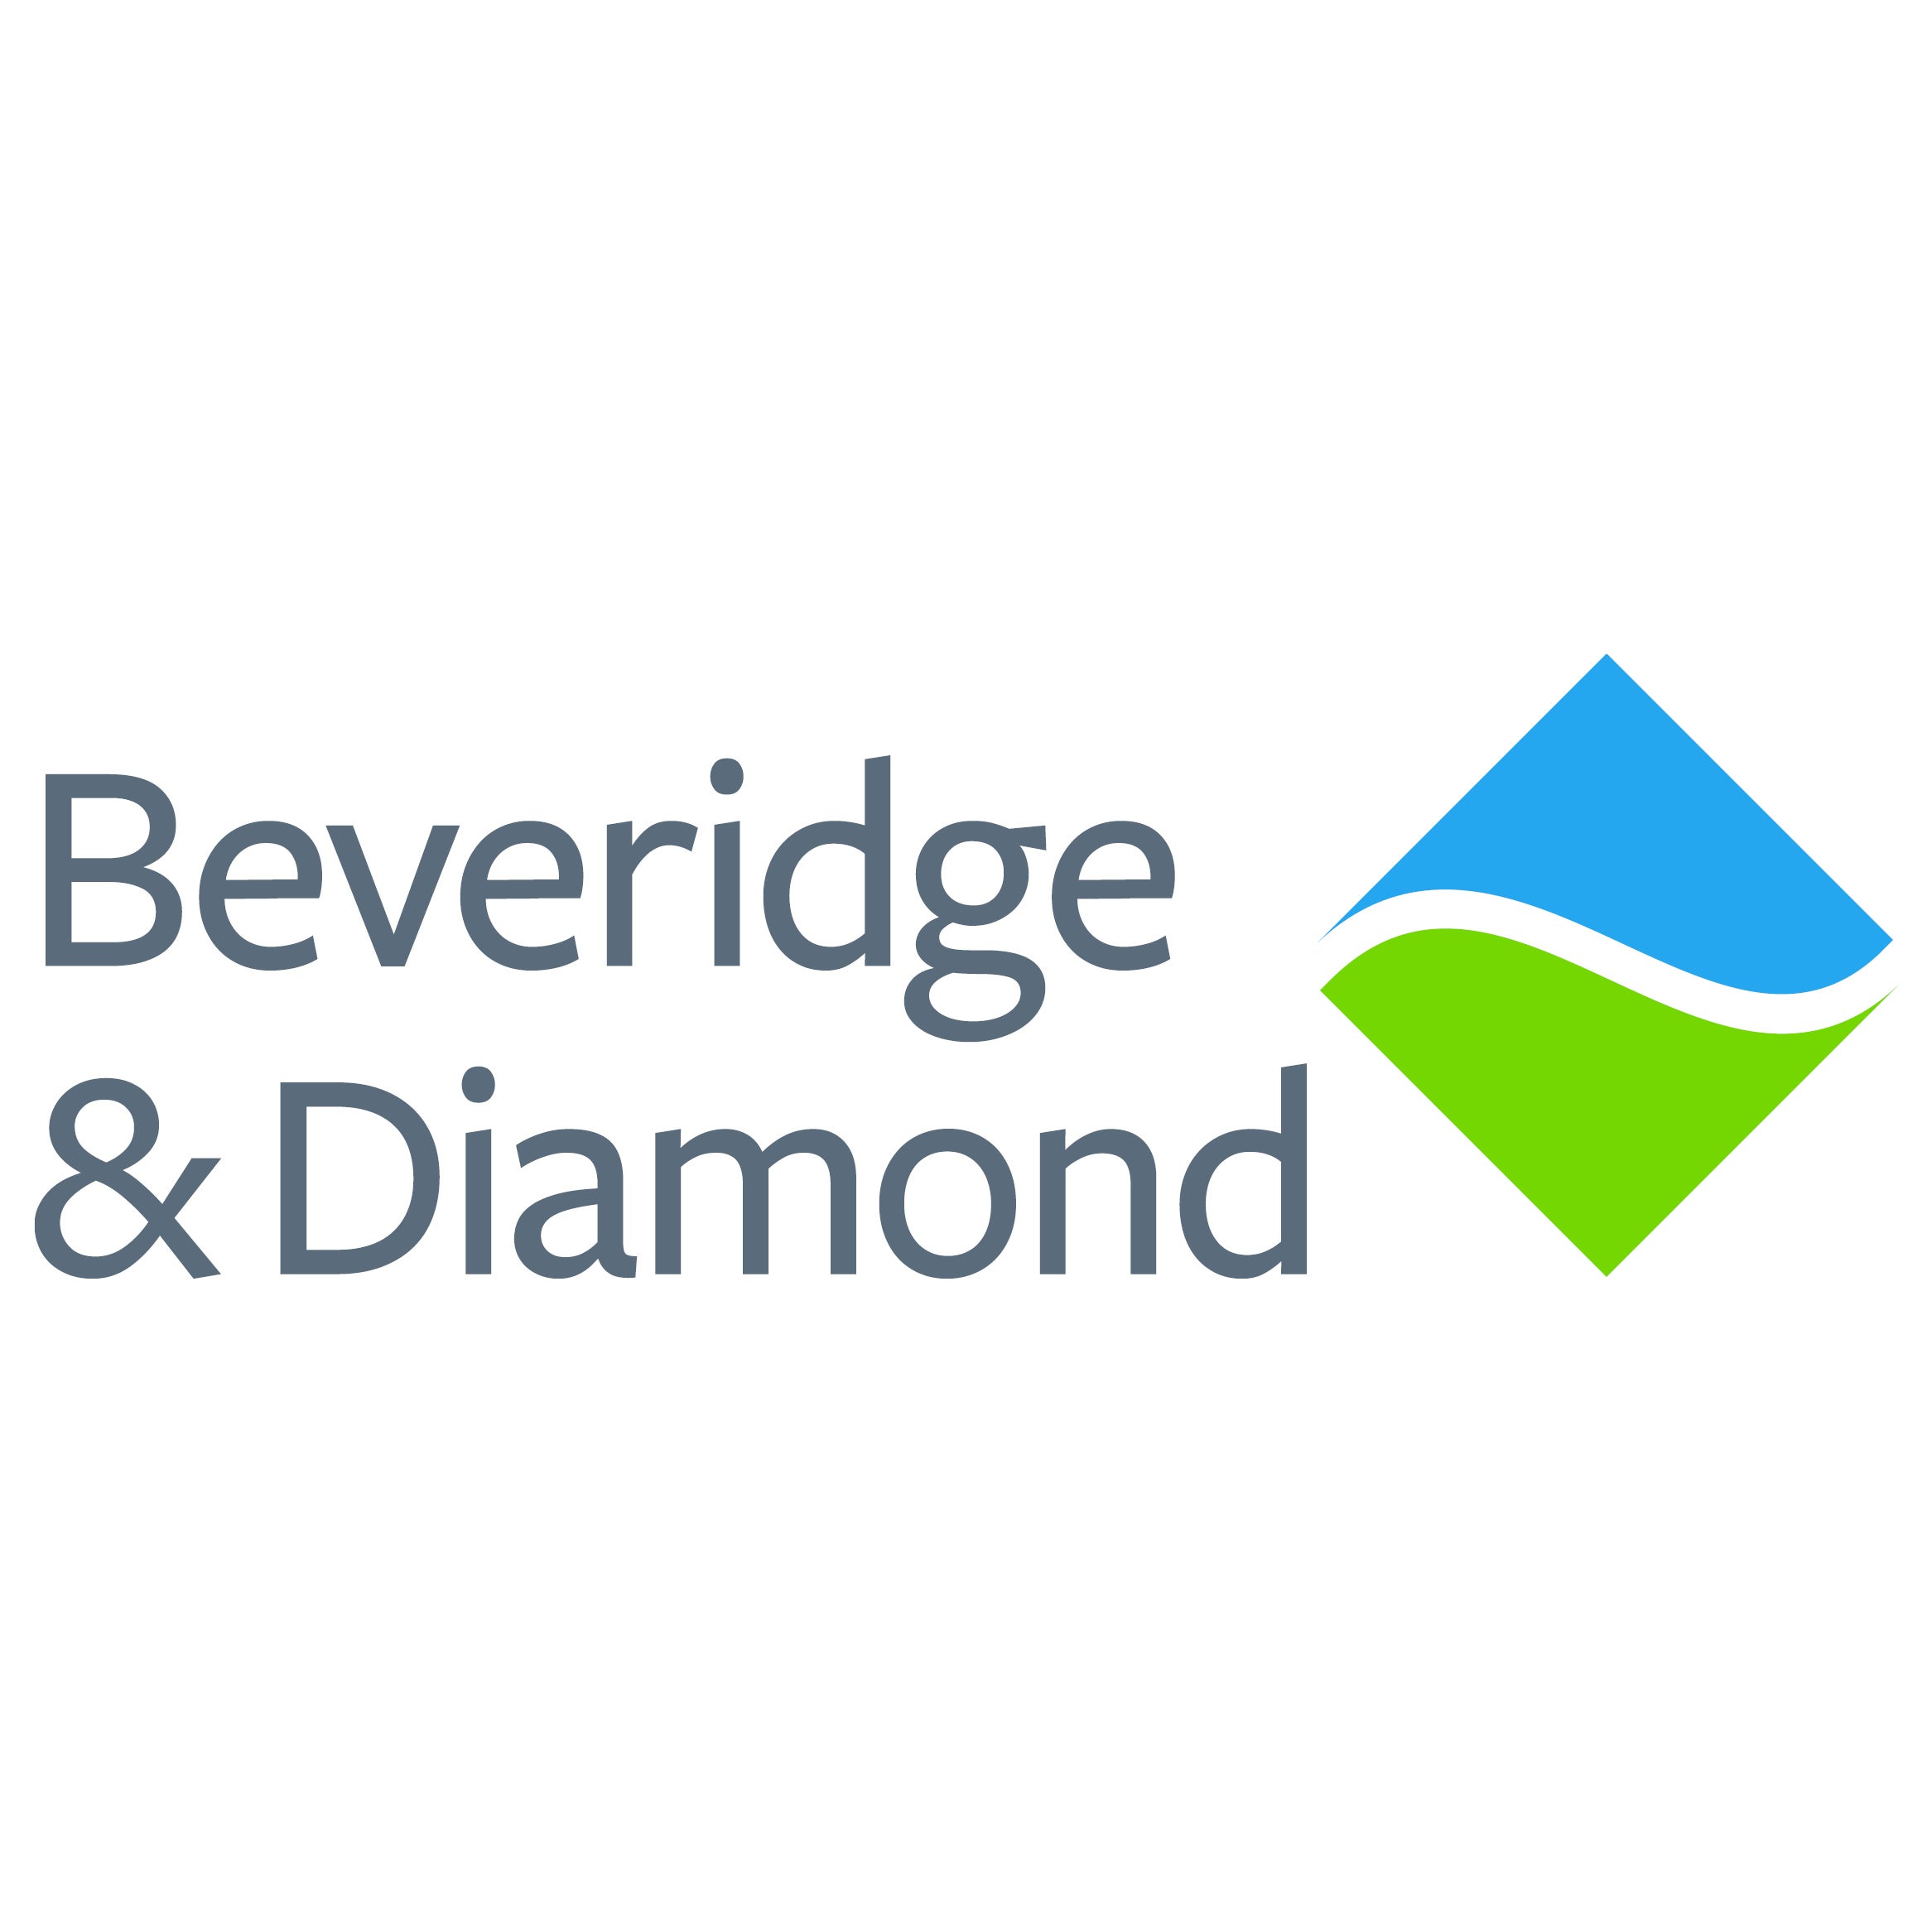 Beveridge & Diamond Ad 560x560